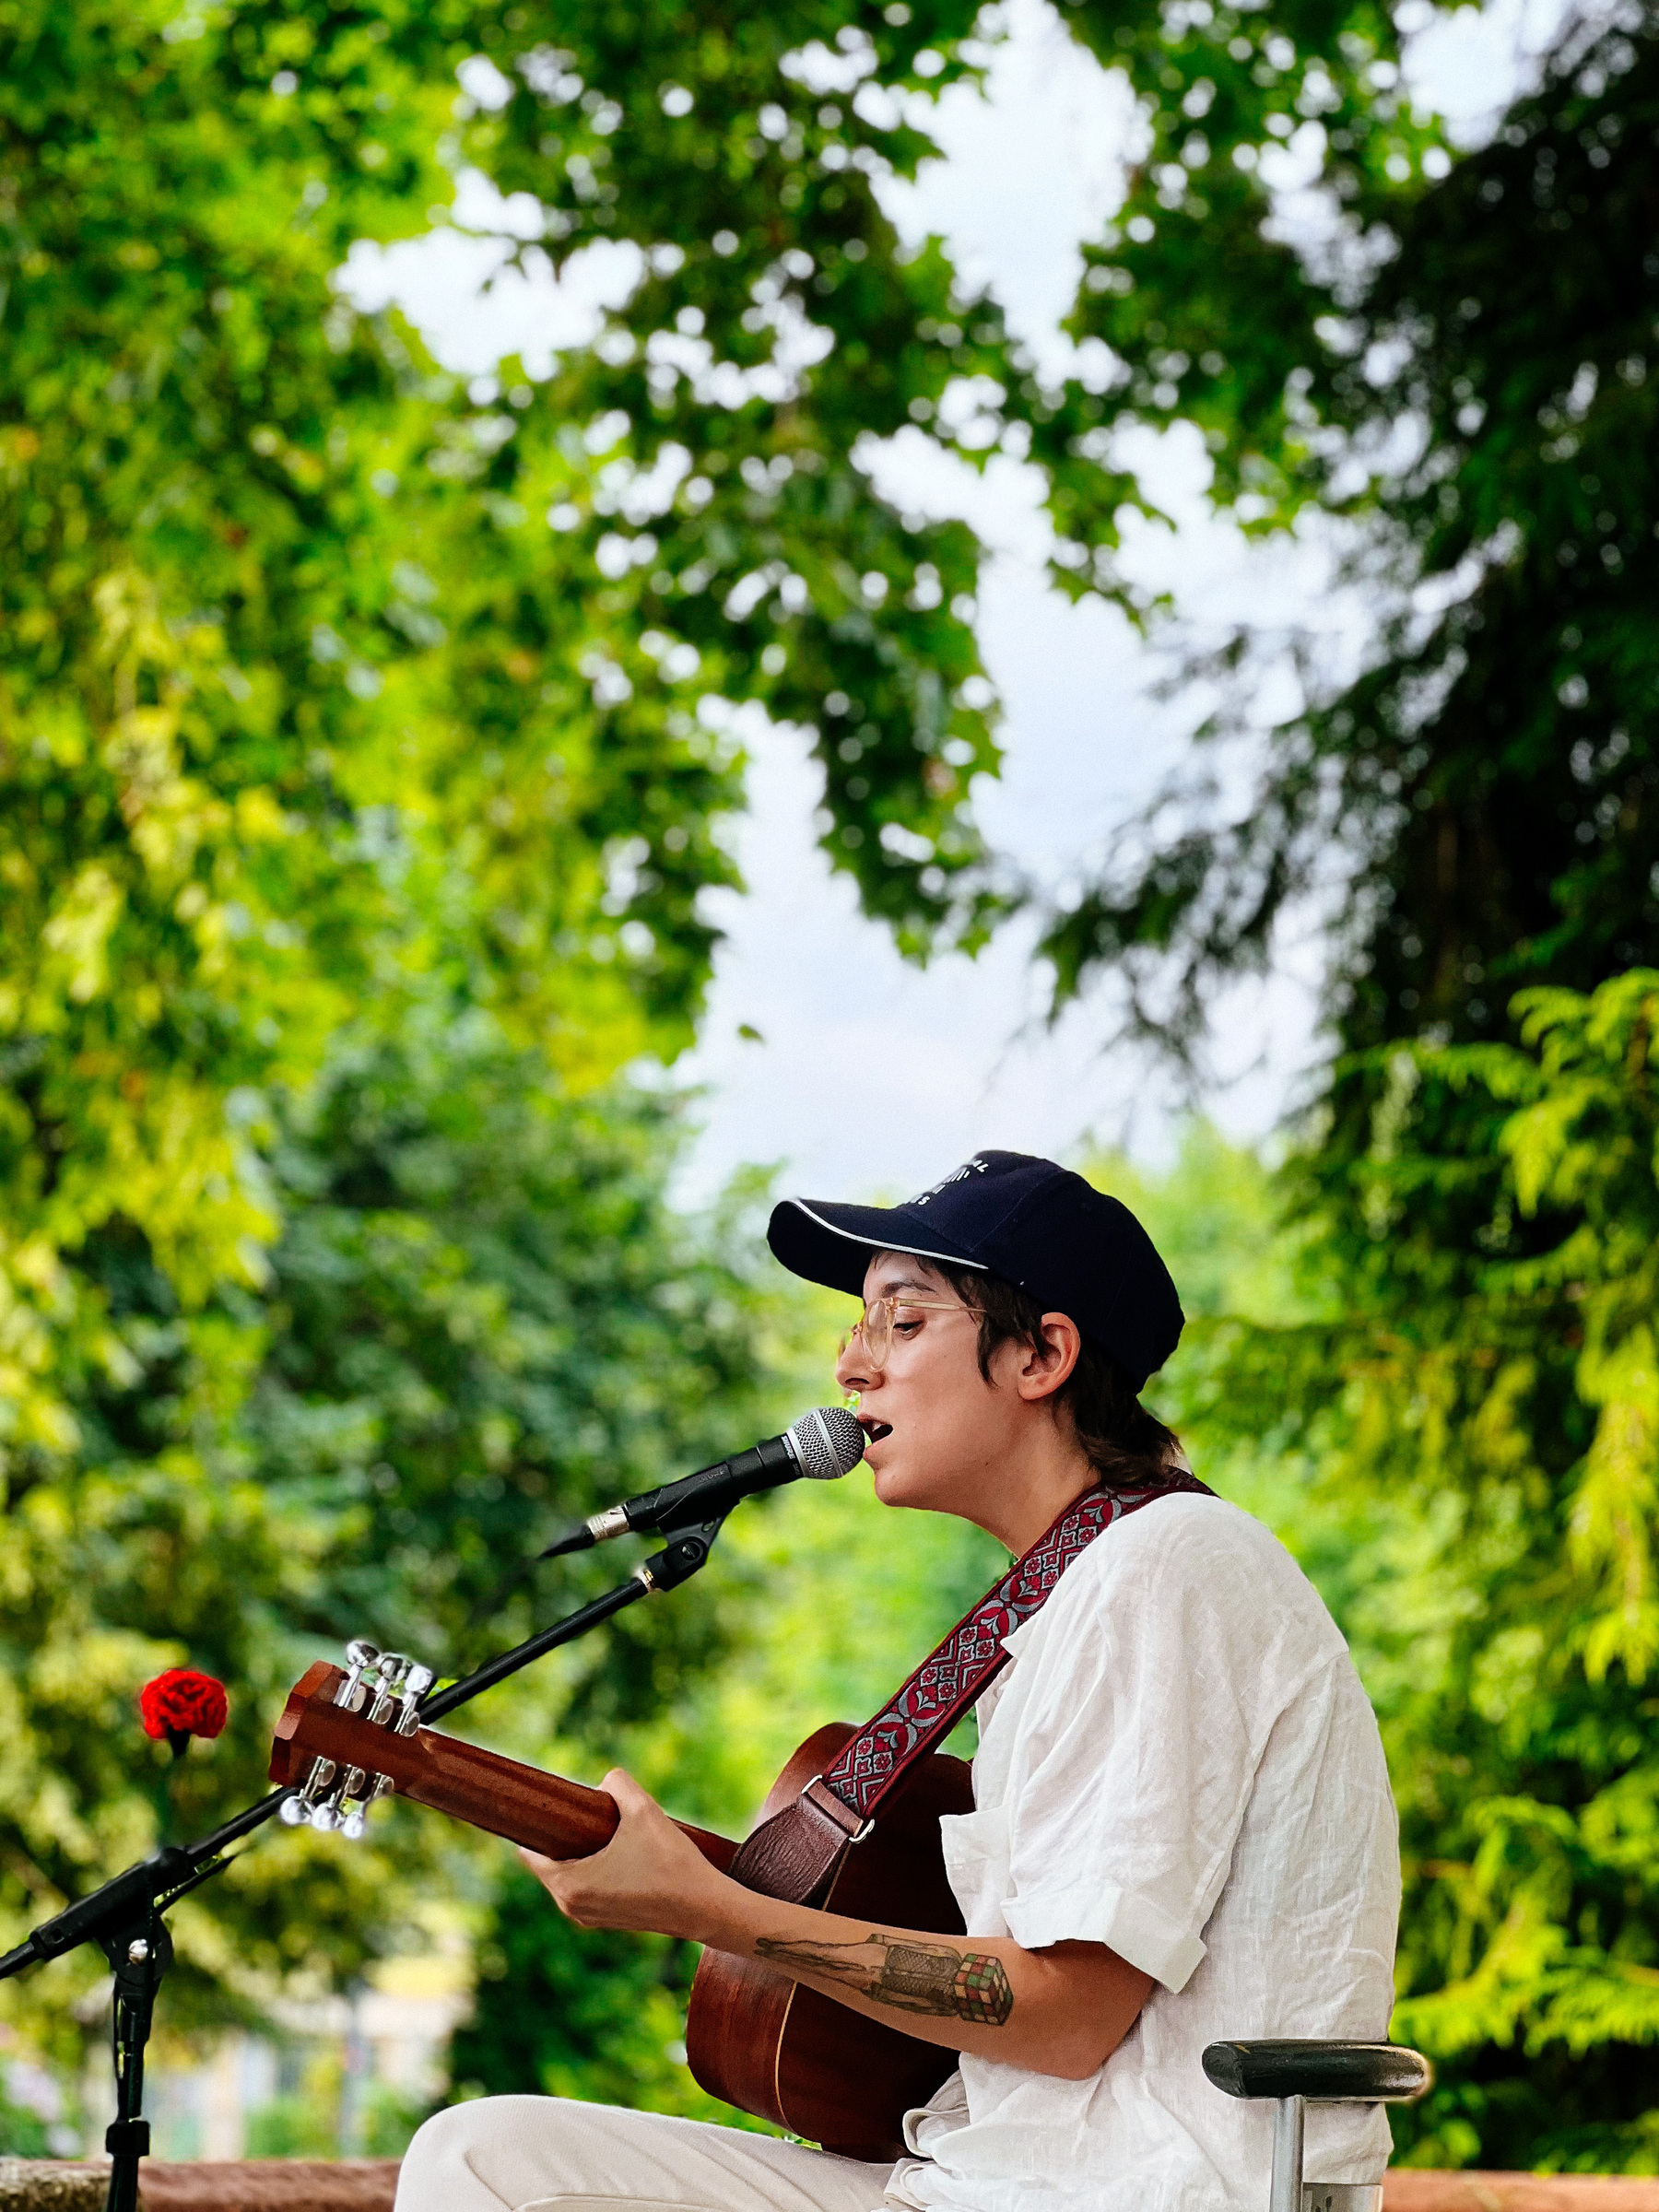 A musician plays guitar in the garden. 